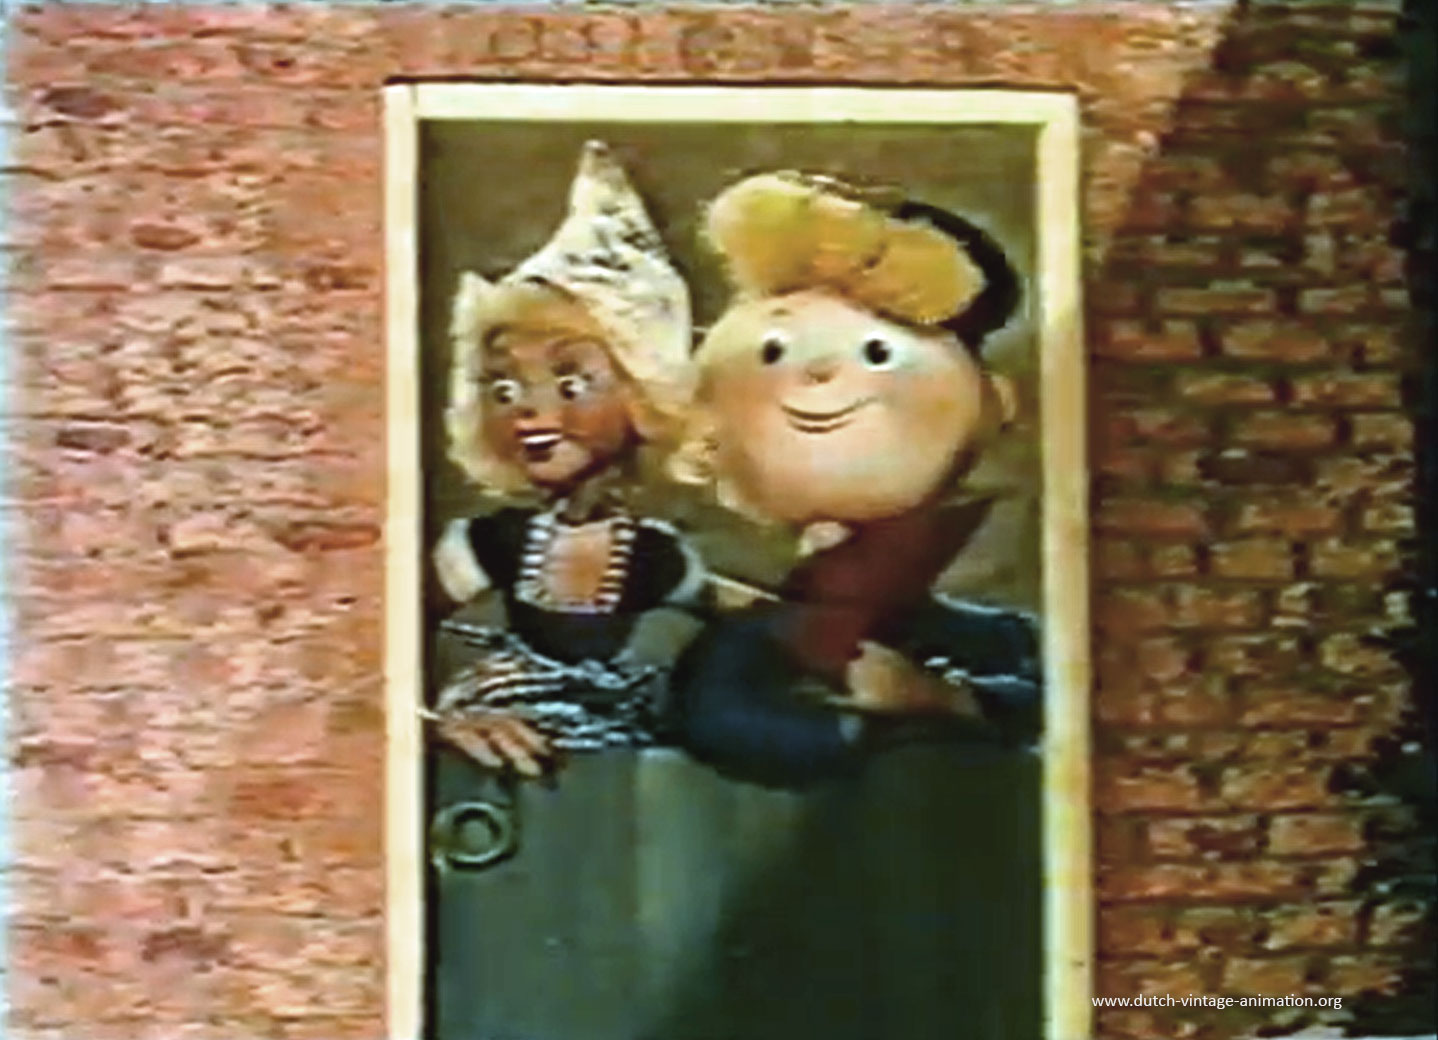 Farmer Dutchy and his wife, Frau Antje. (Holland Invites The World (1957)